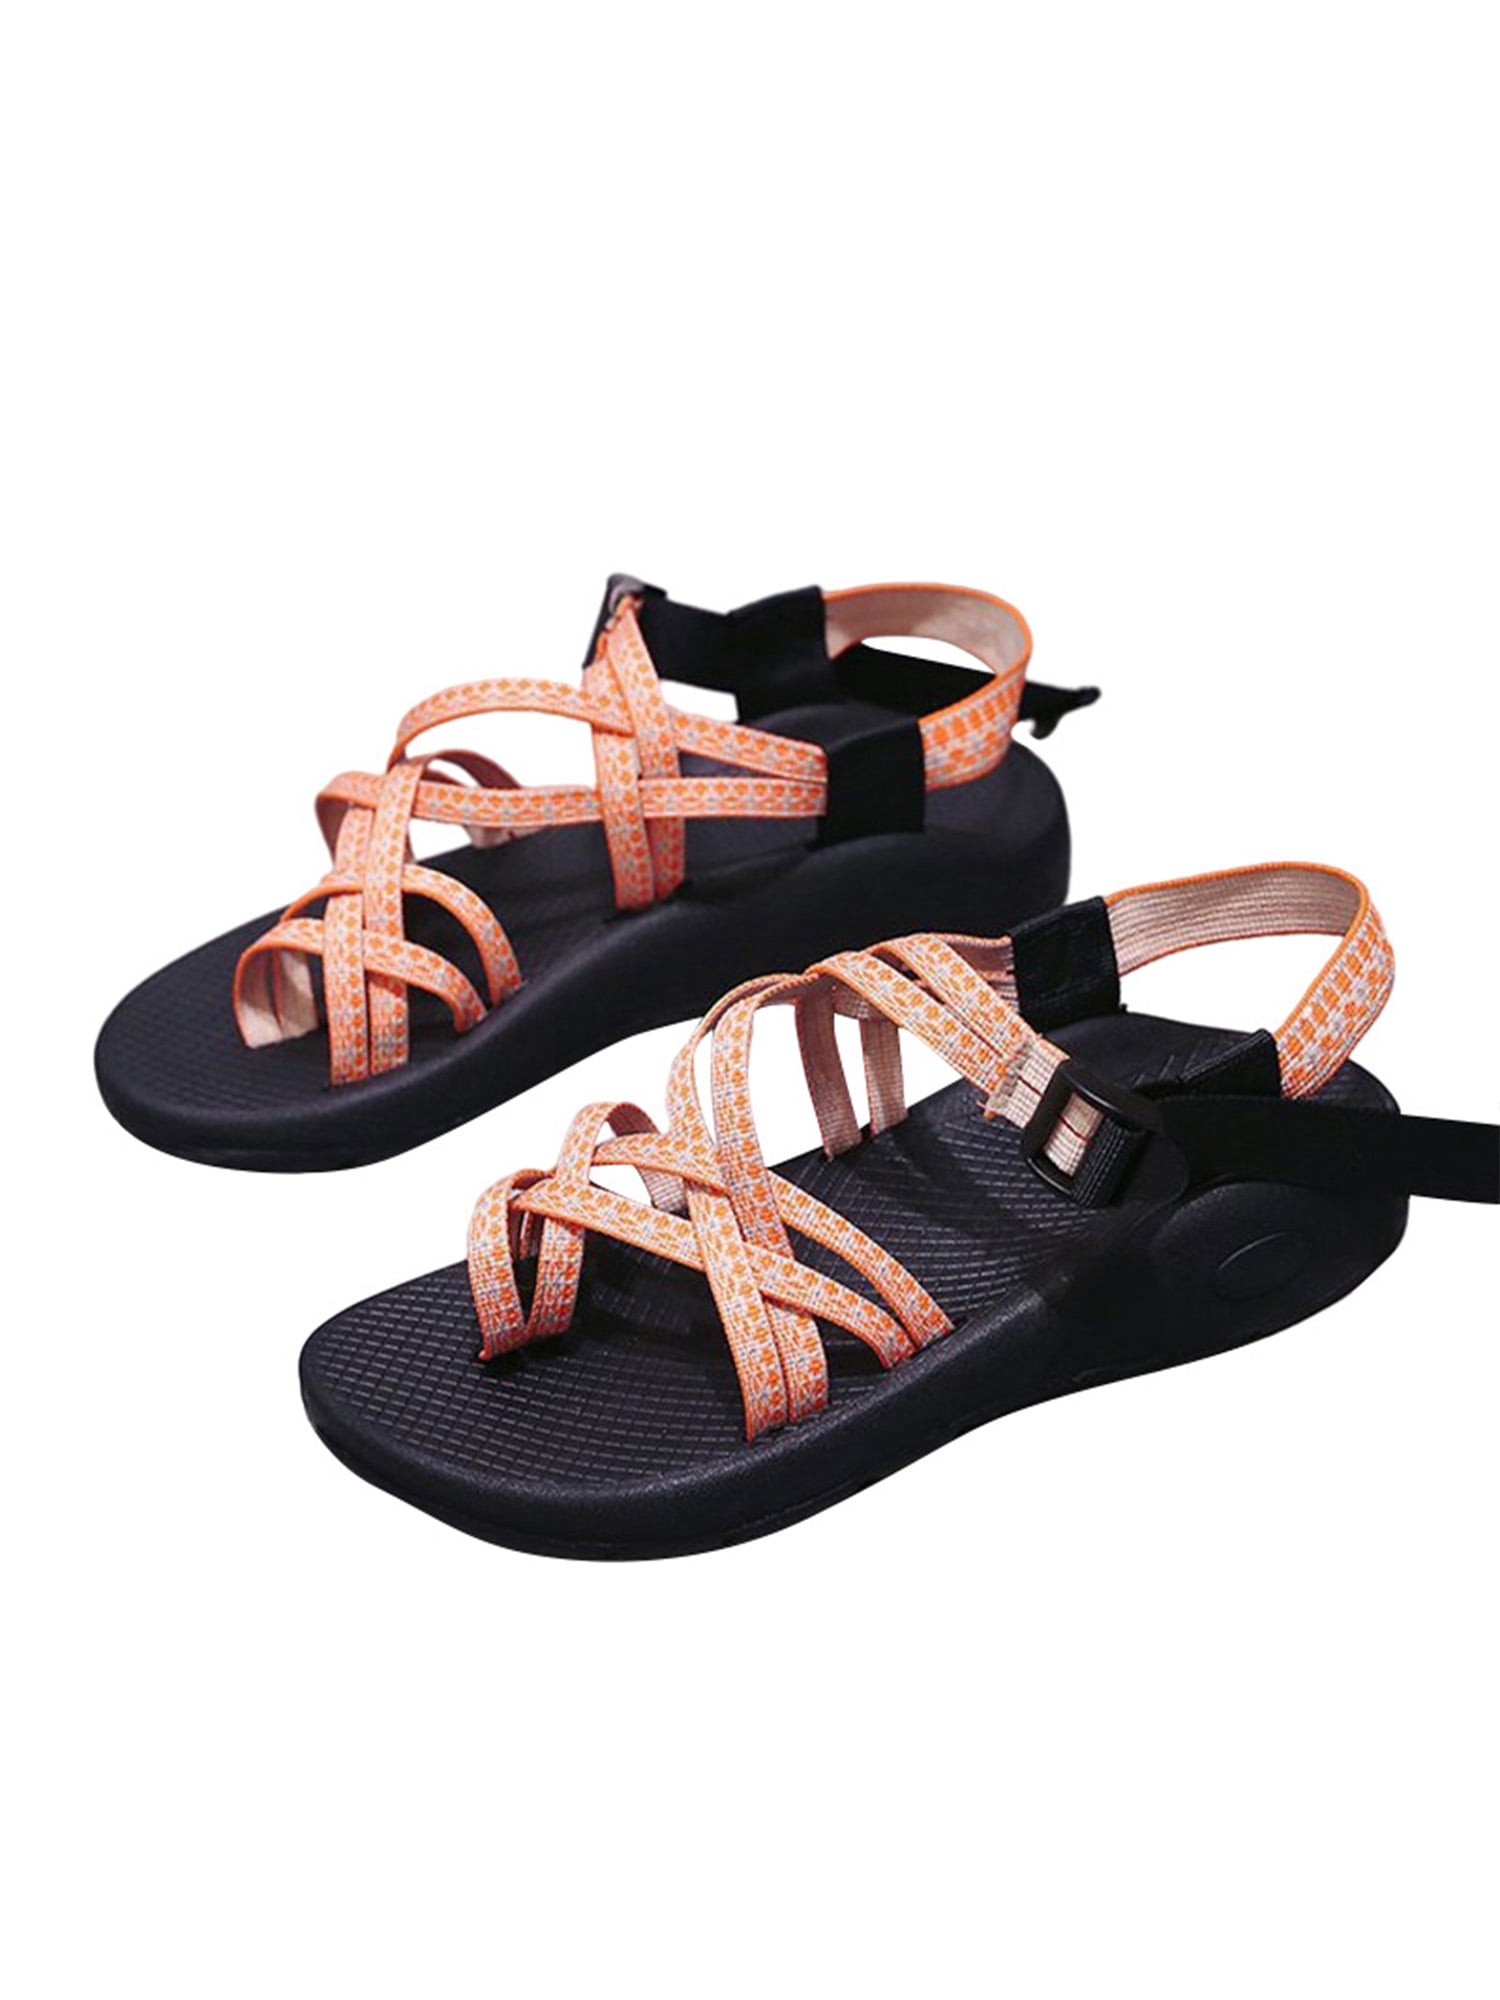 Buy > lightweight summer slippers > in stock